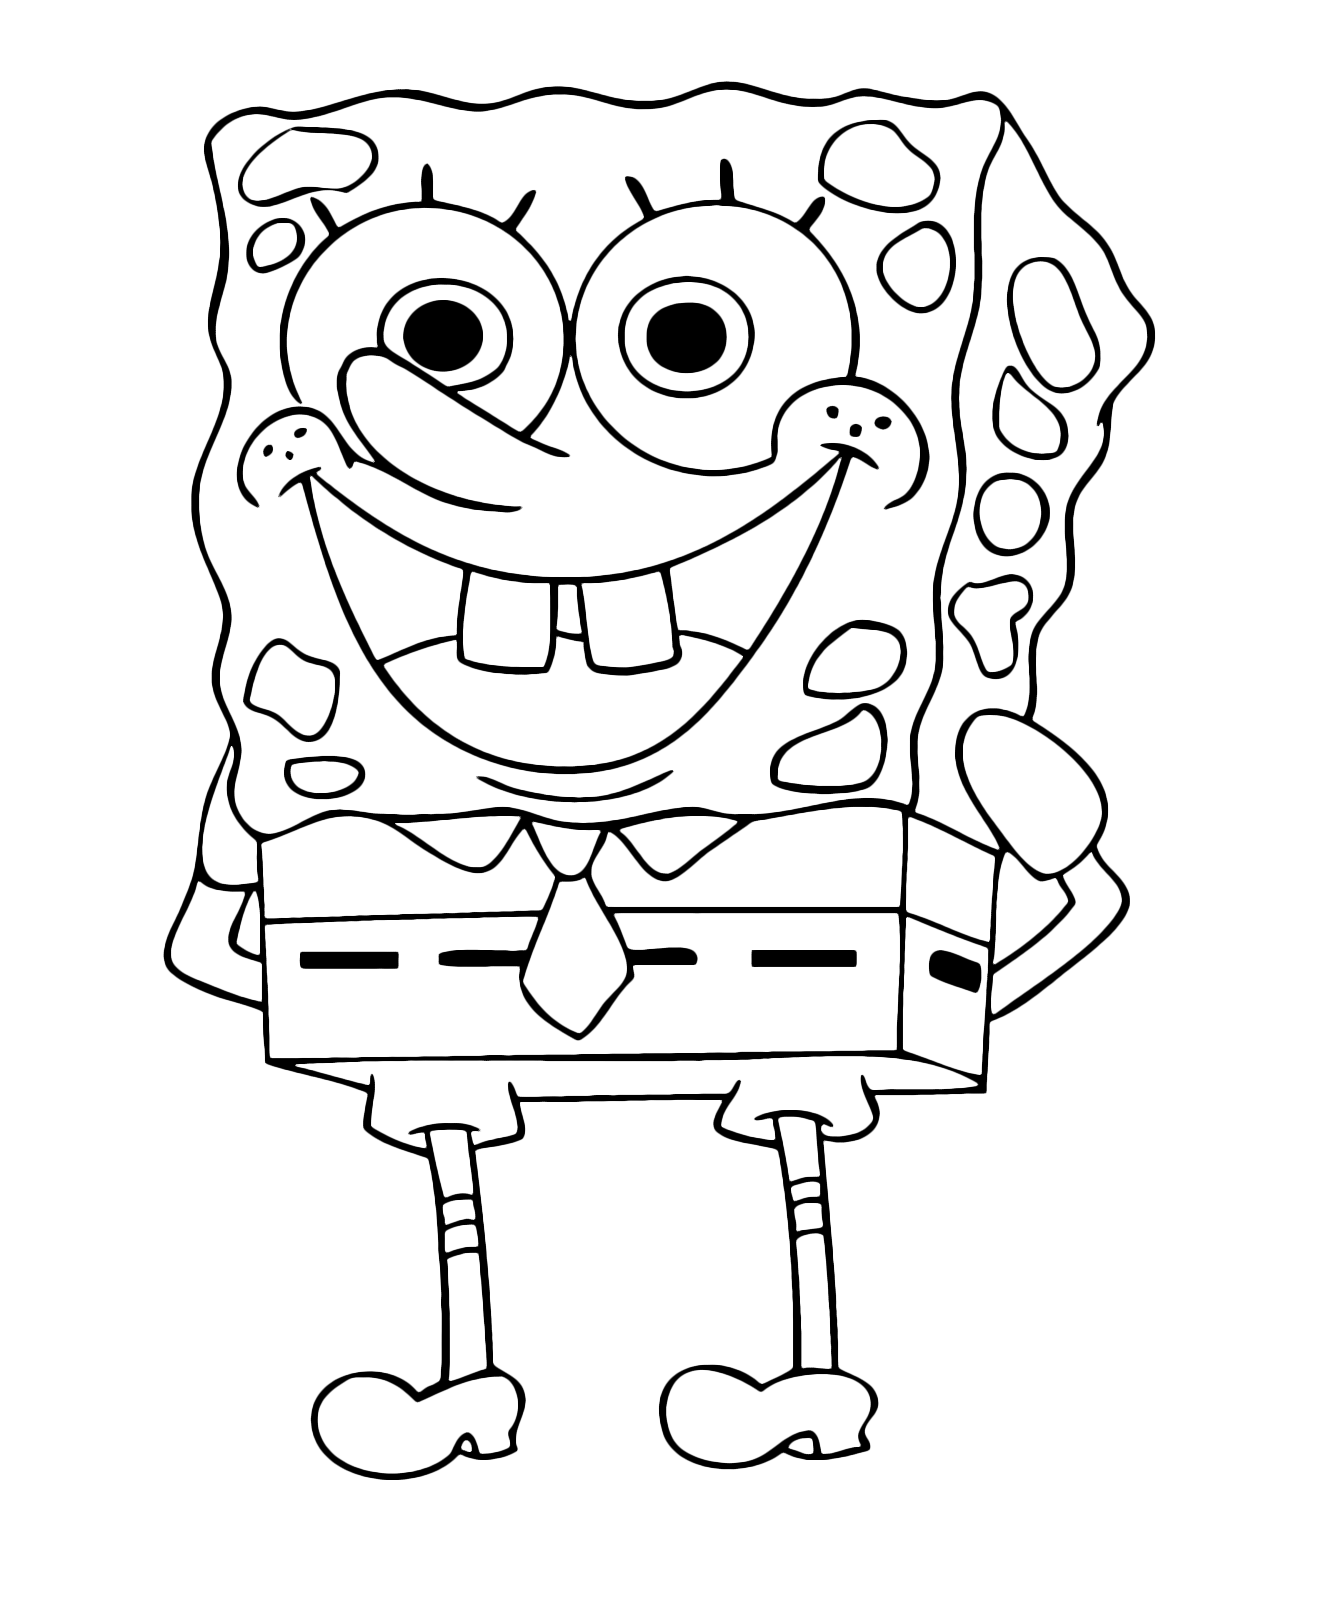 SpongeBob - SpongeBob with his arms behind his back